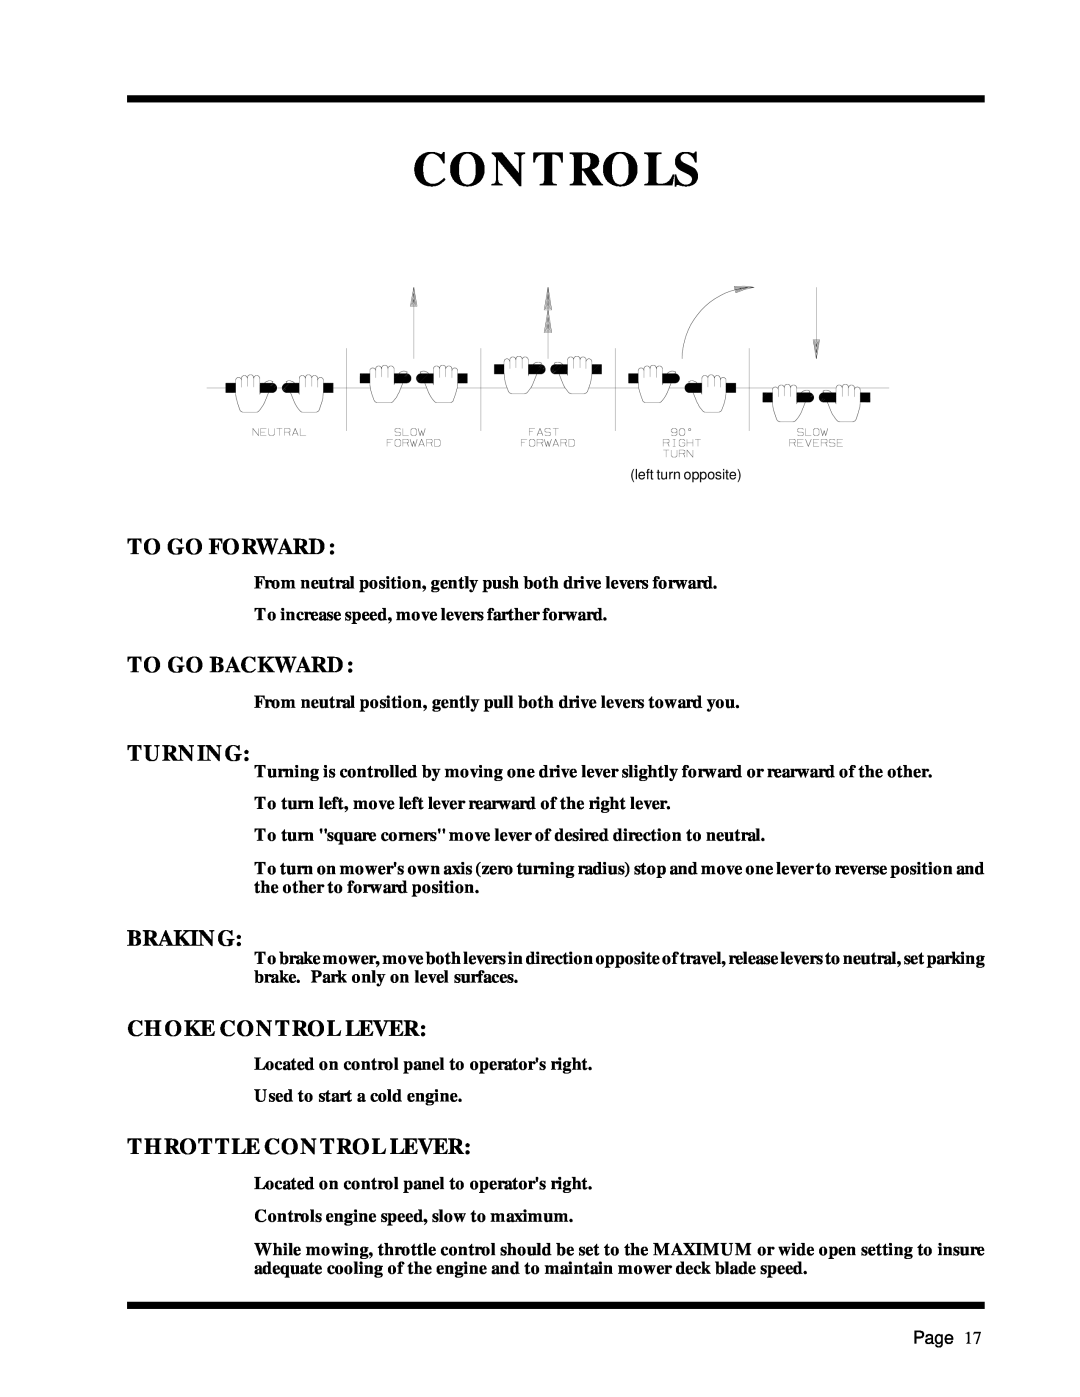 Dixon ZTR 5017Twin Controls, To Go Forward, To Go Backward, Turning, Braking, Choke Control Lever, Throttle Control Lever 